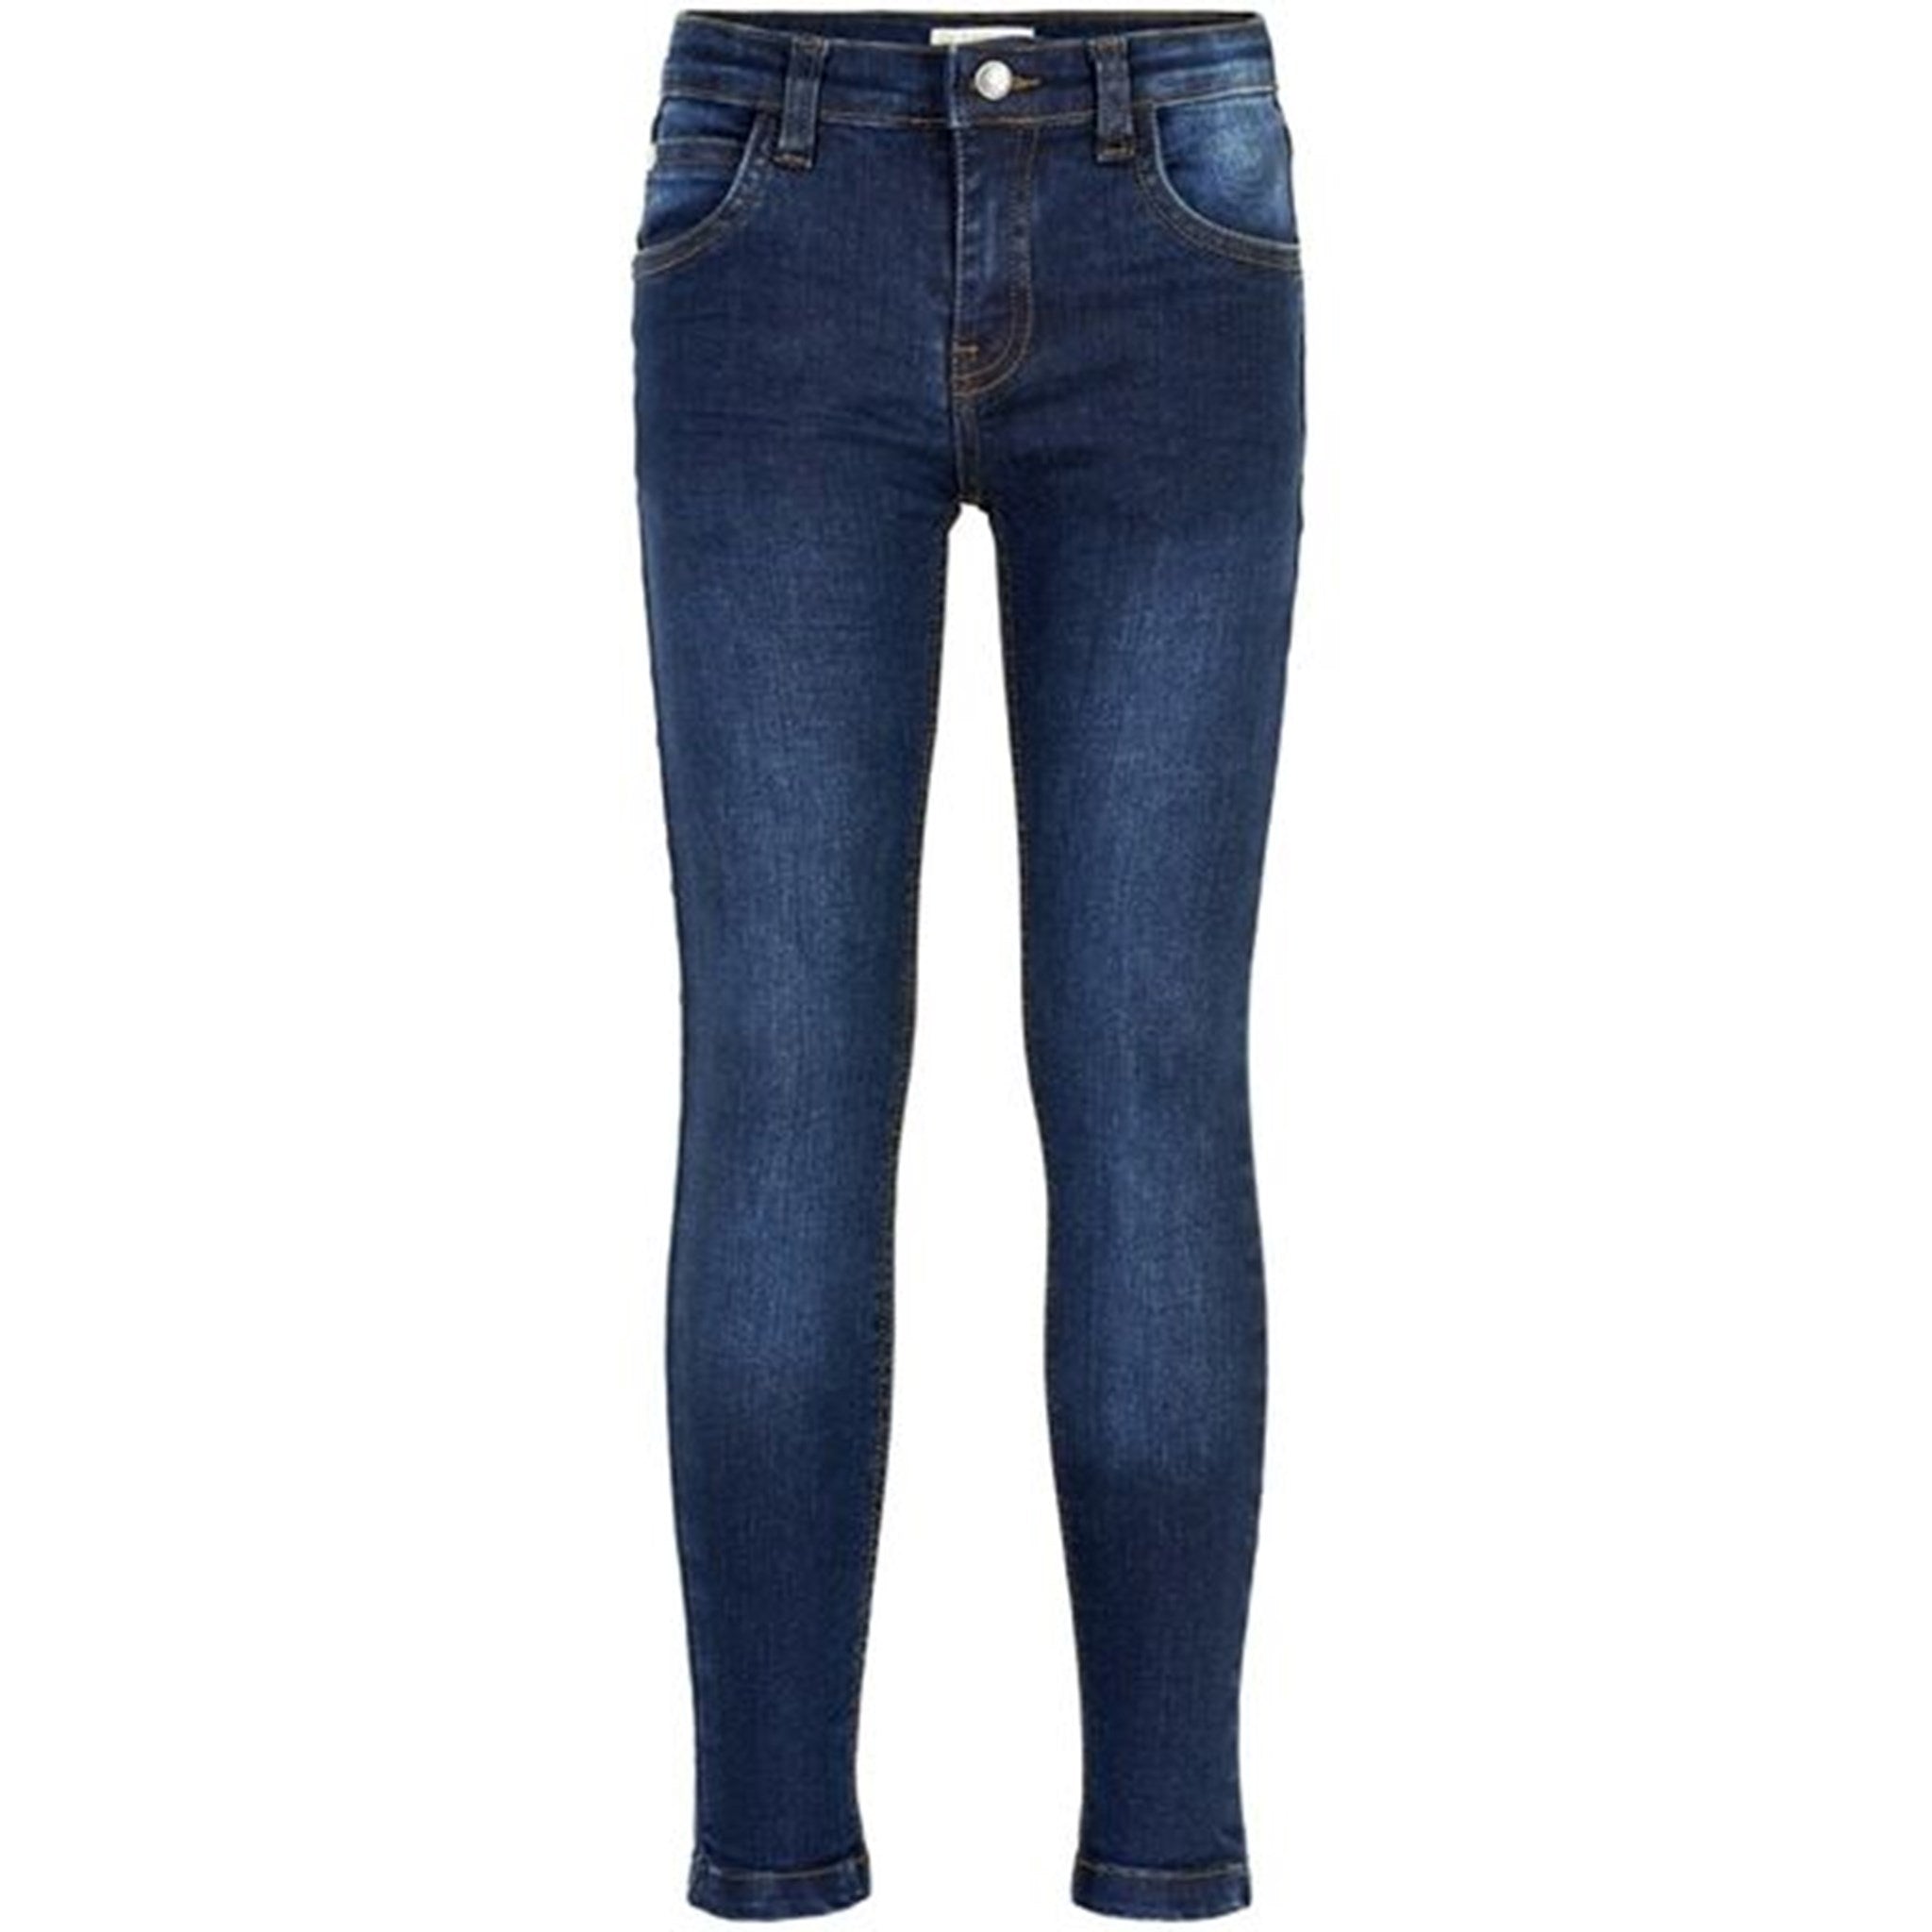 The New Oslo Super Slim Jeans Blue